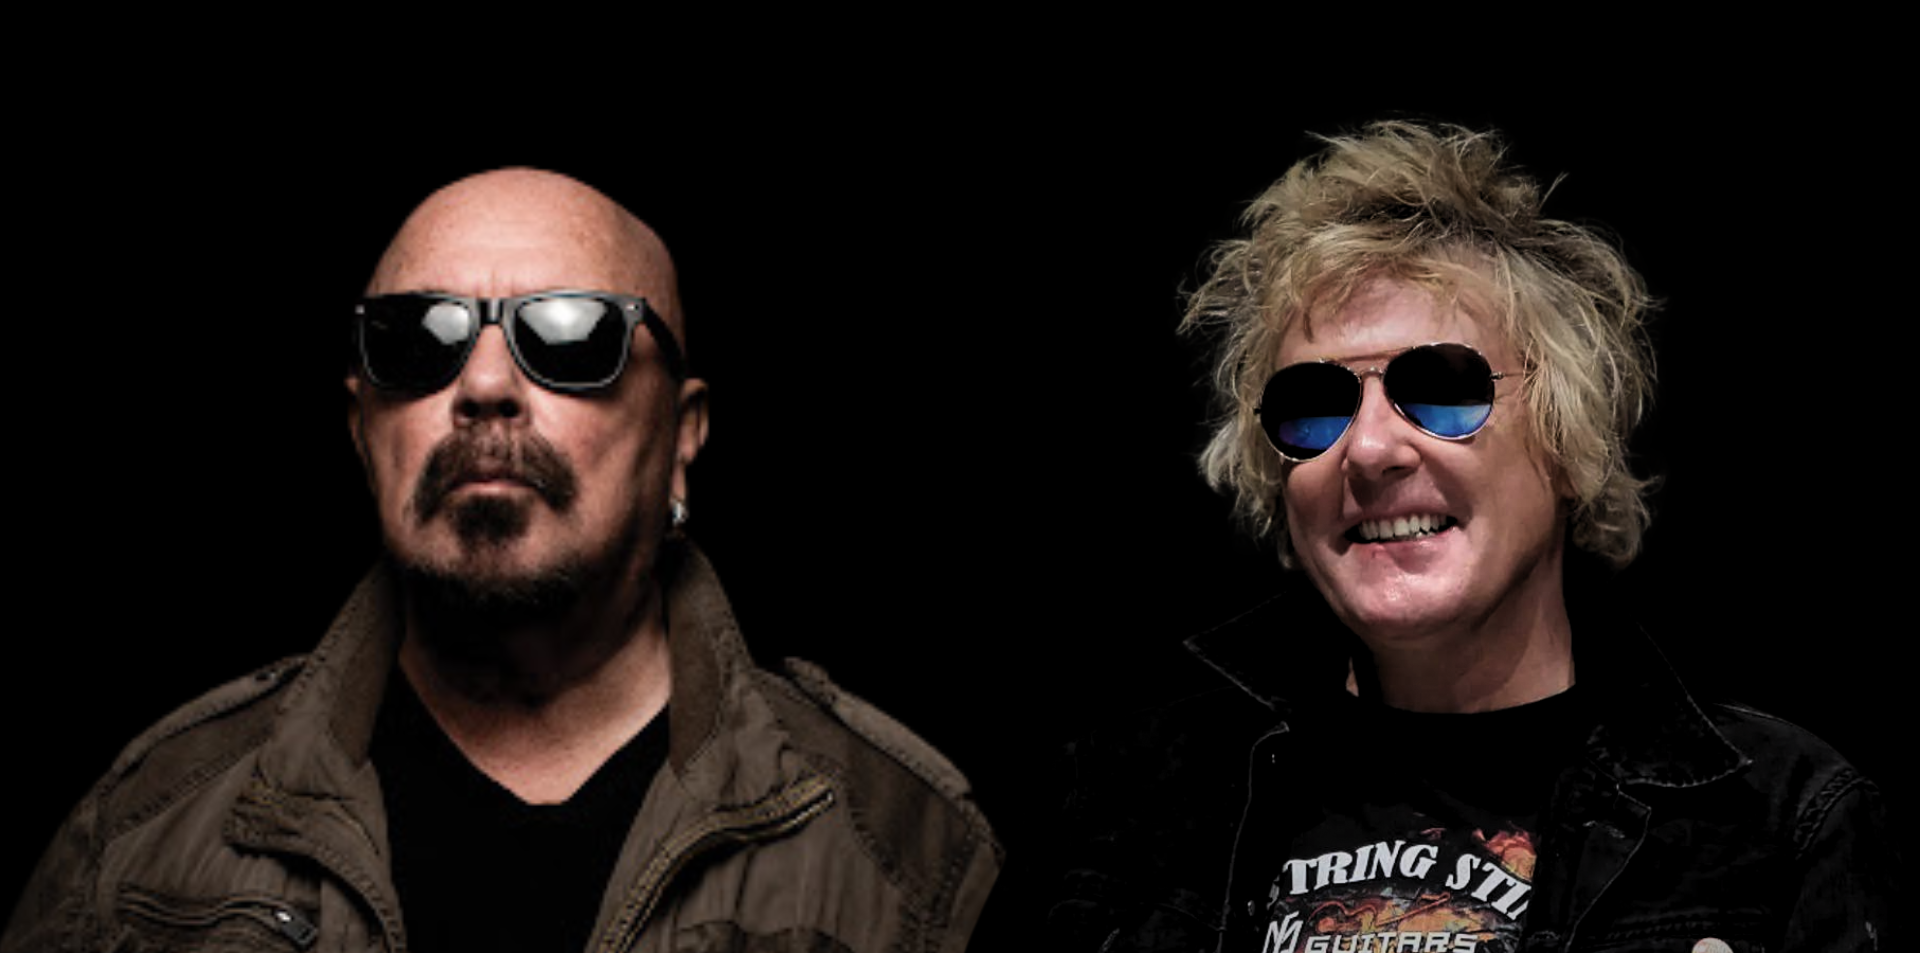 Tony Clarkin and James Kottak die on dark day for rock